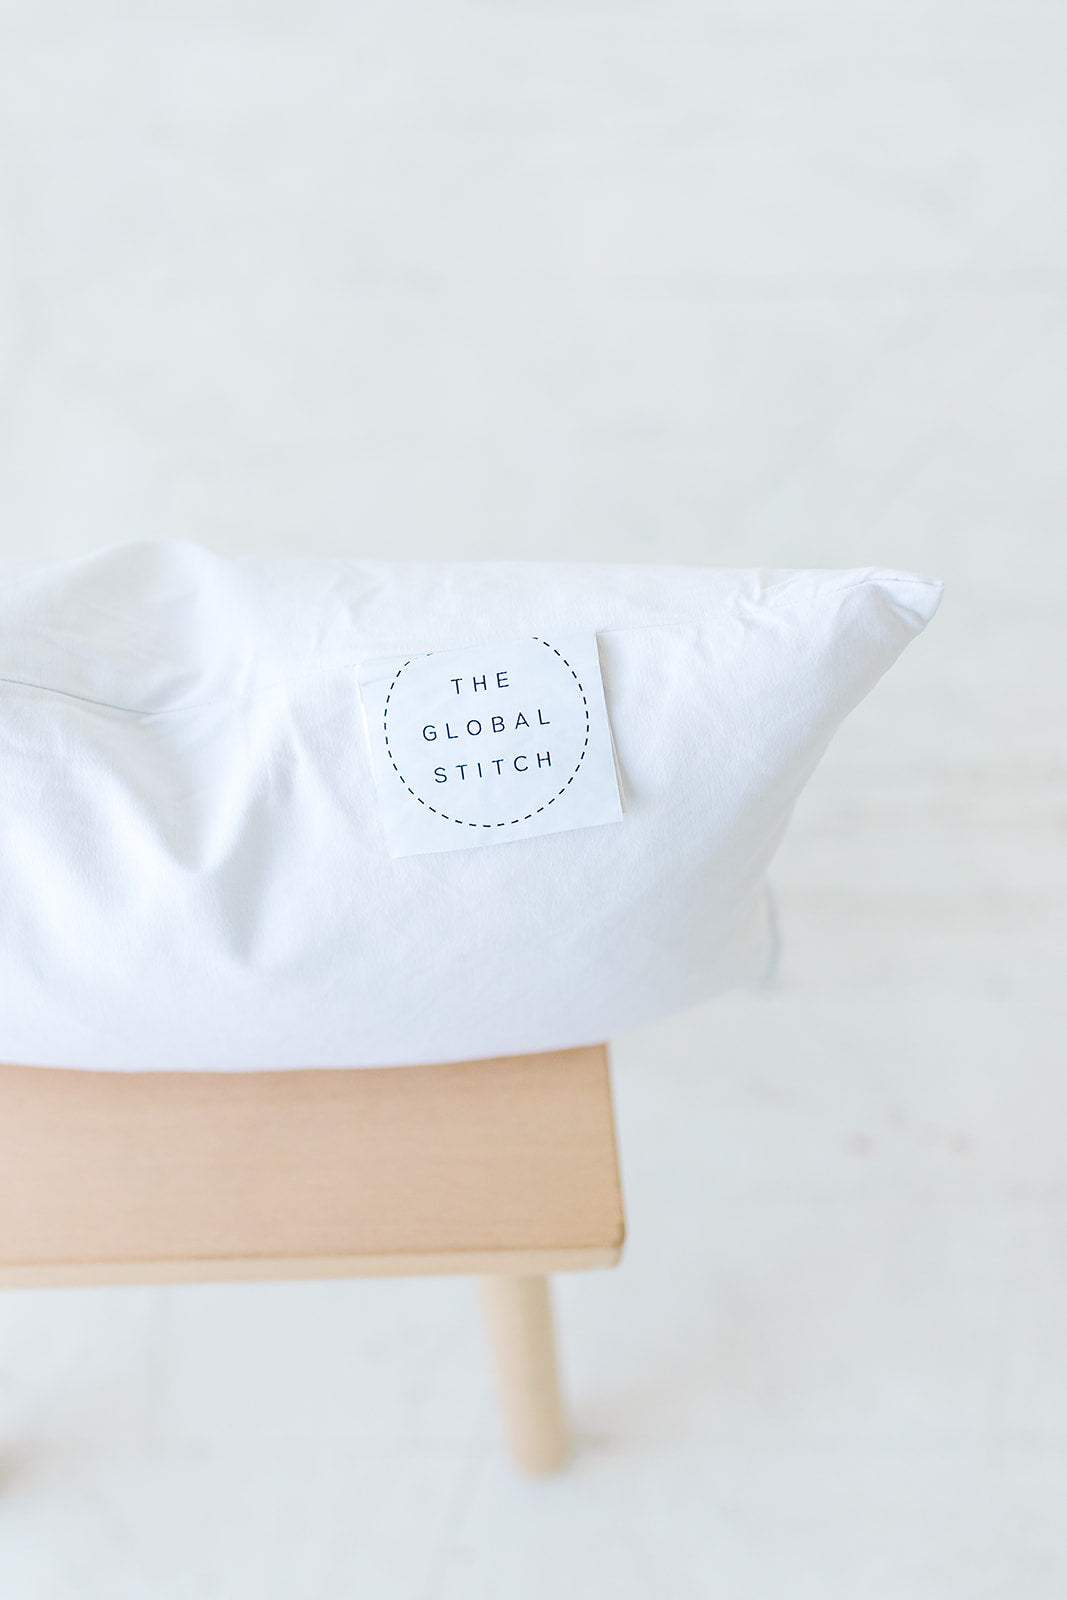 Pillow Inserts Handwoven Pillow Inserts Custom Size Pillow Inserts Very  Soft Pillow Inserts All Sizings Pillow Inserts Inserts Pillows 